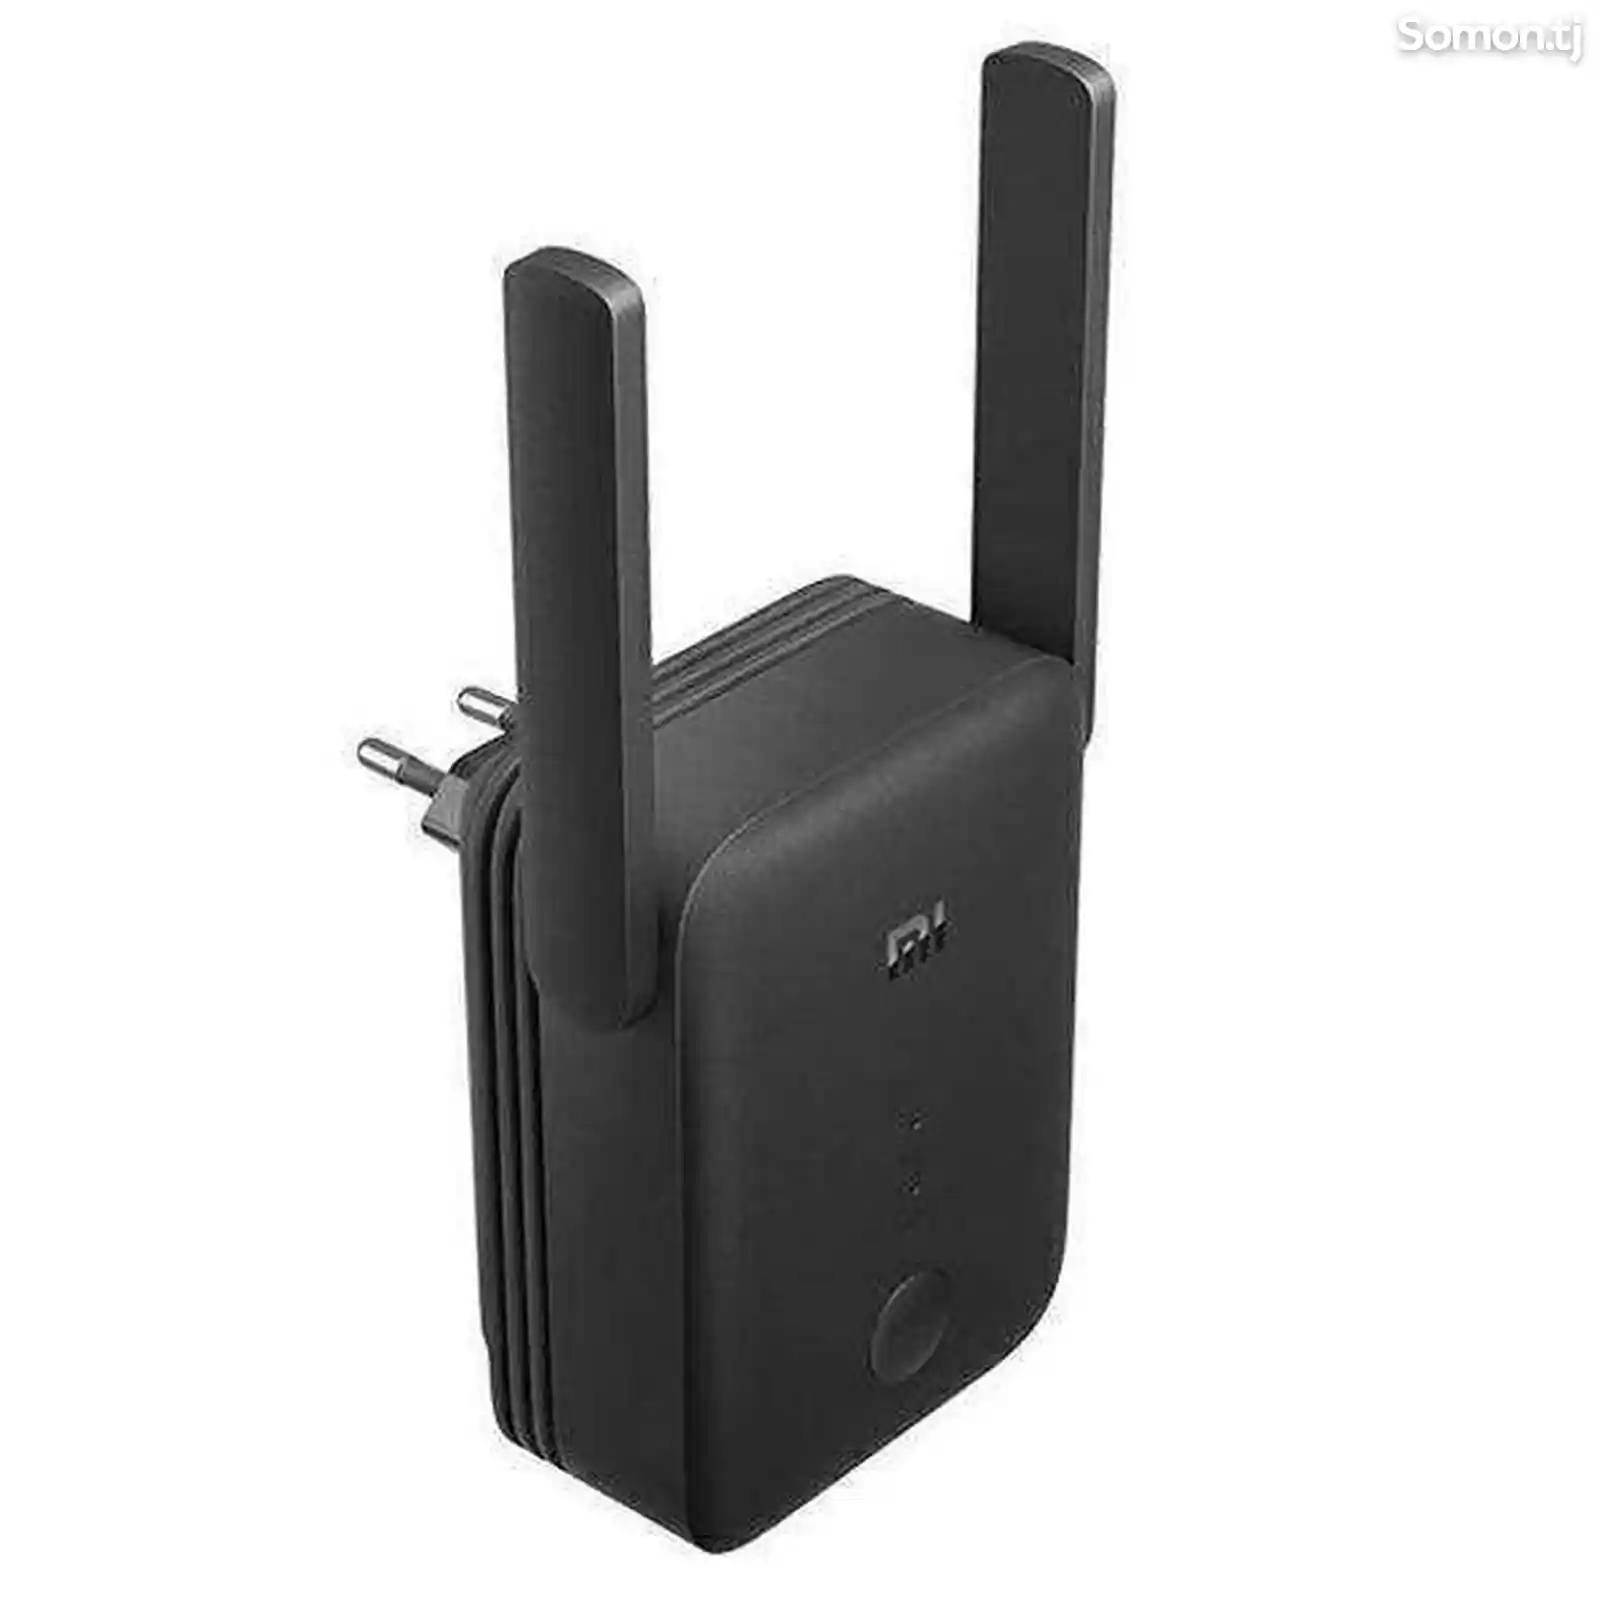 Усилитель Wi-Fi сигнала репитер. Mi WiFi Range Extender AC1200-5